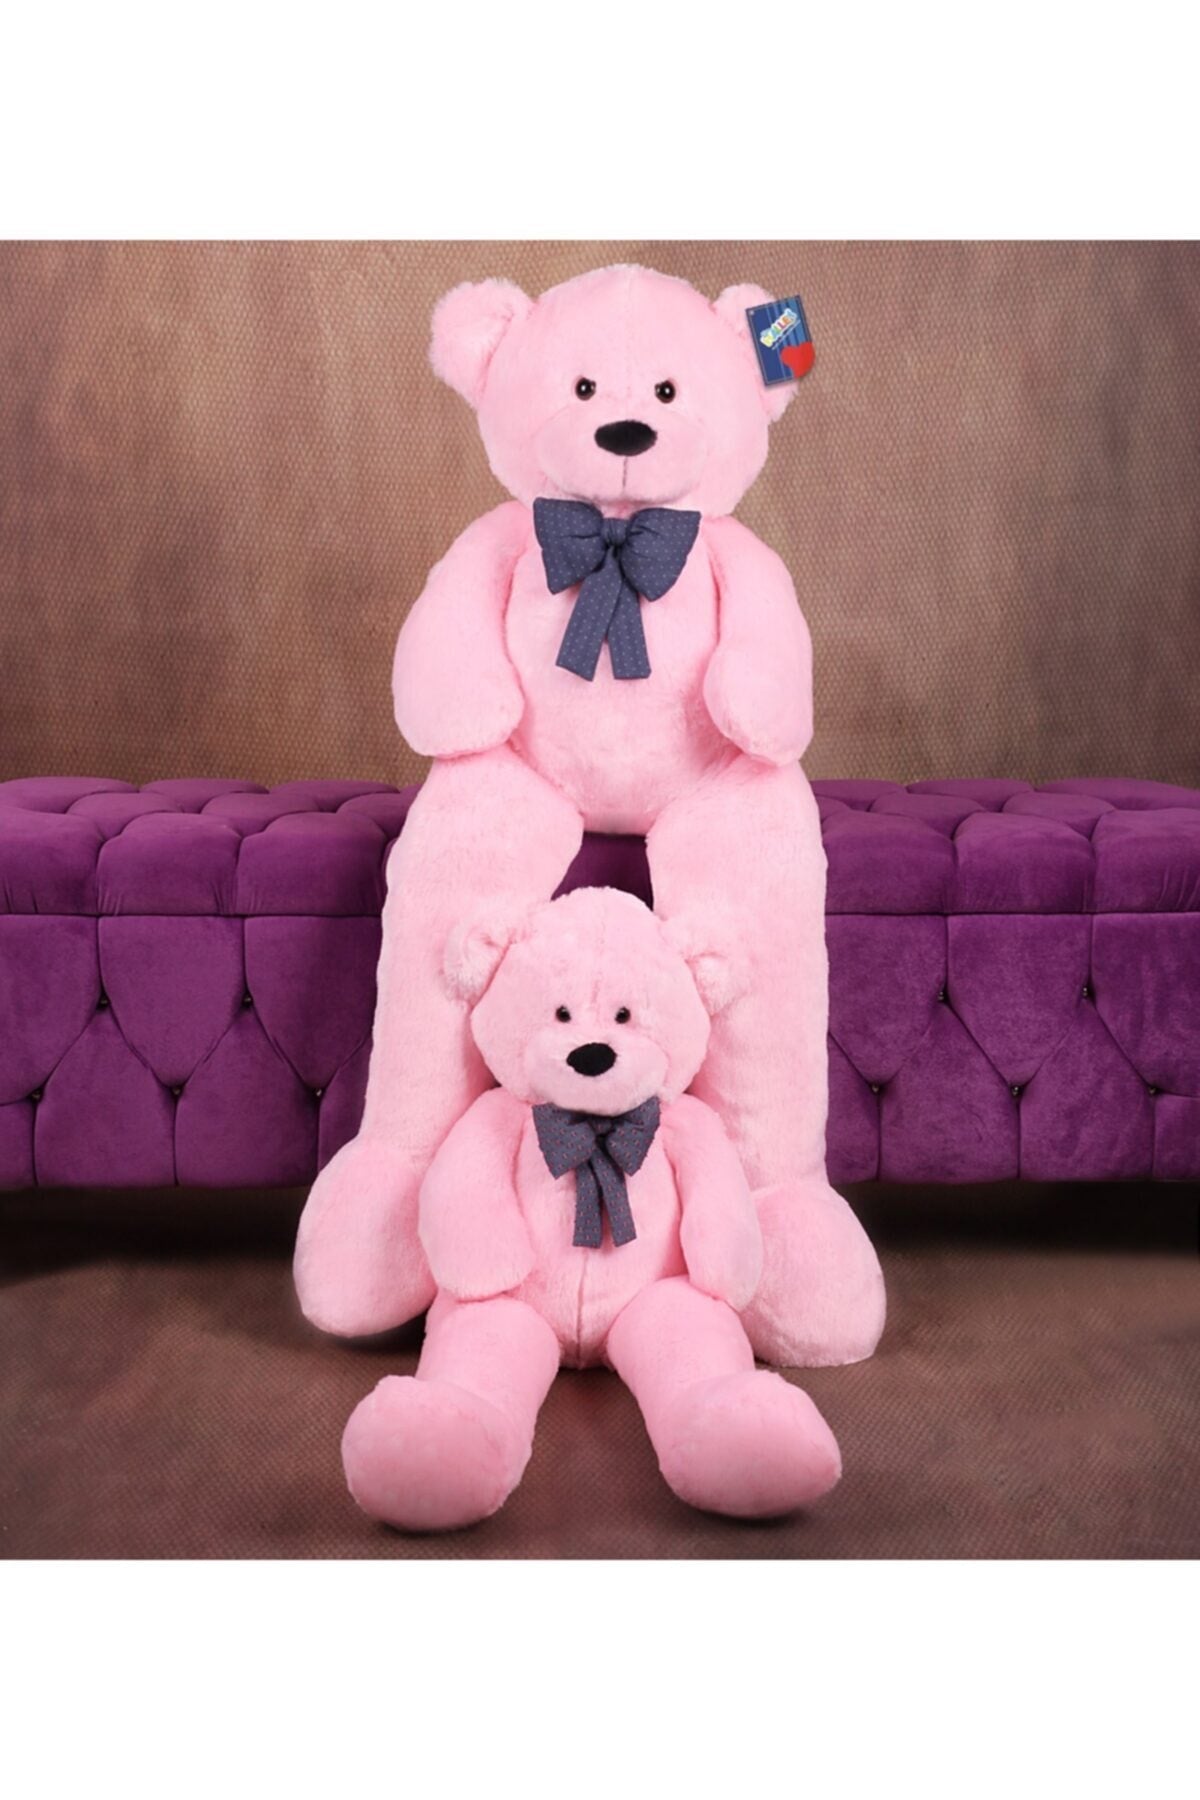 Toy 80 Cm Big Teddy Teddy with Bow Tie Pink